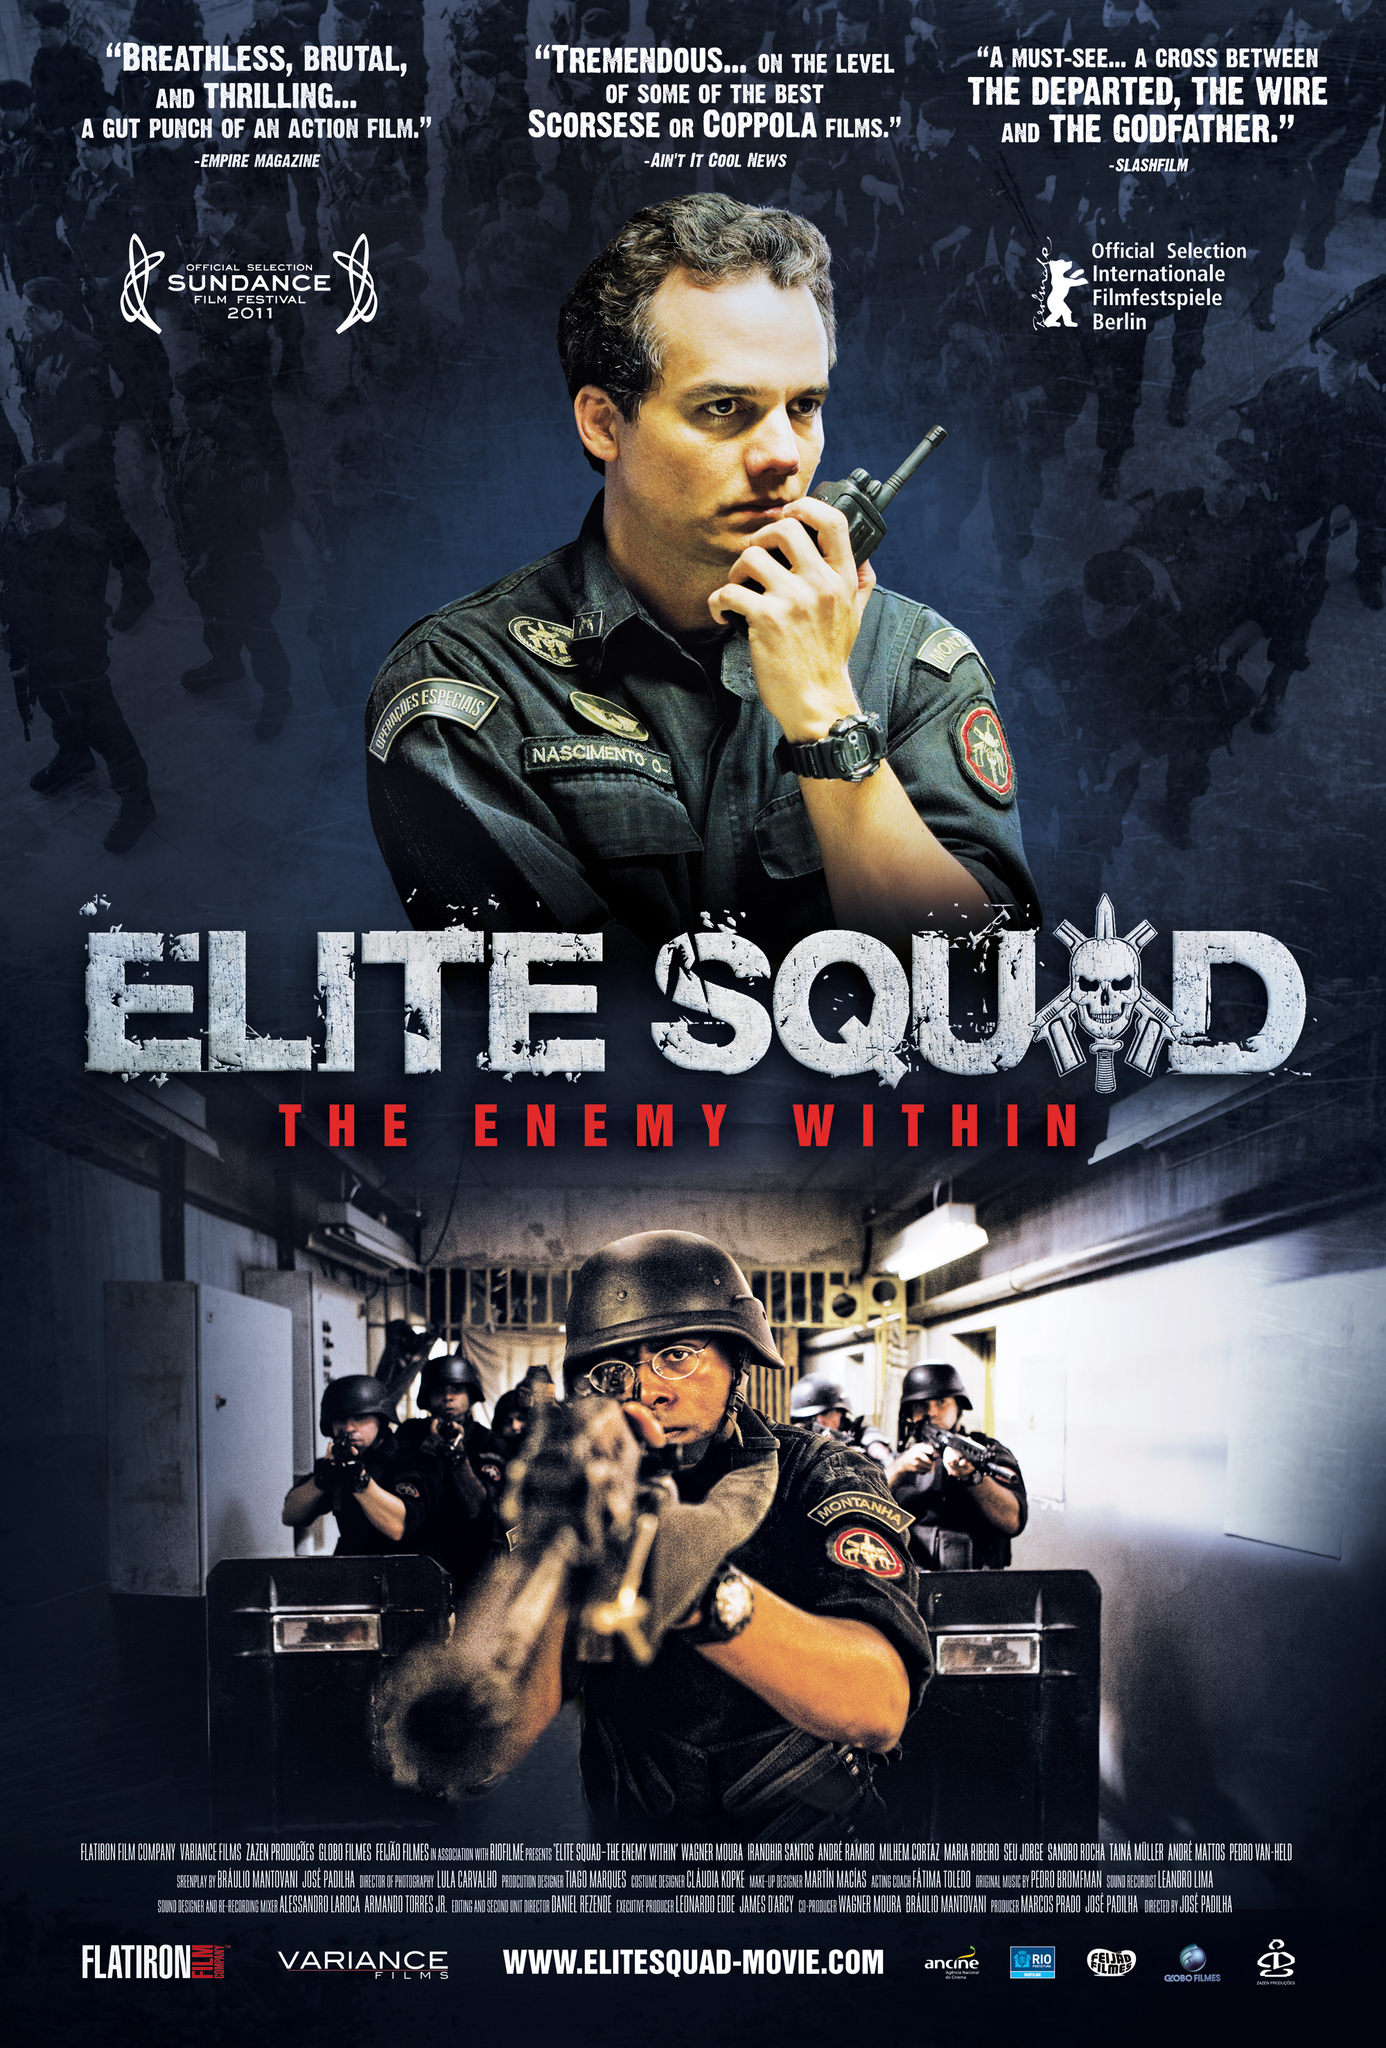 Nonton film Elite Squad The Enemy Within layarkaca21 indoxx1 ganool online streaming terbaru